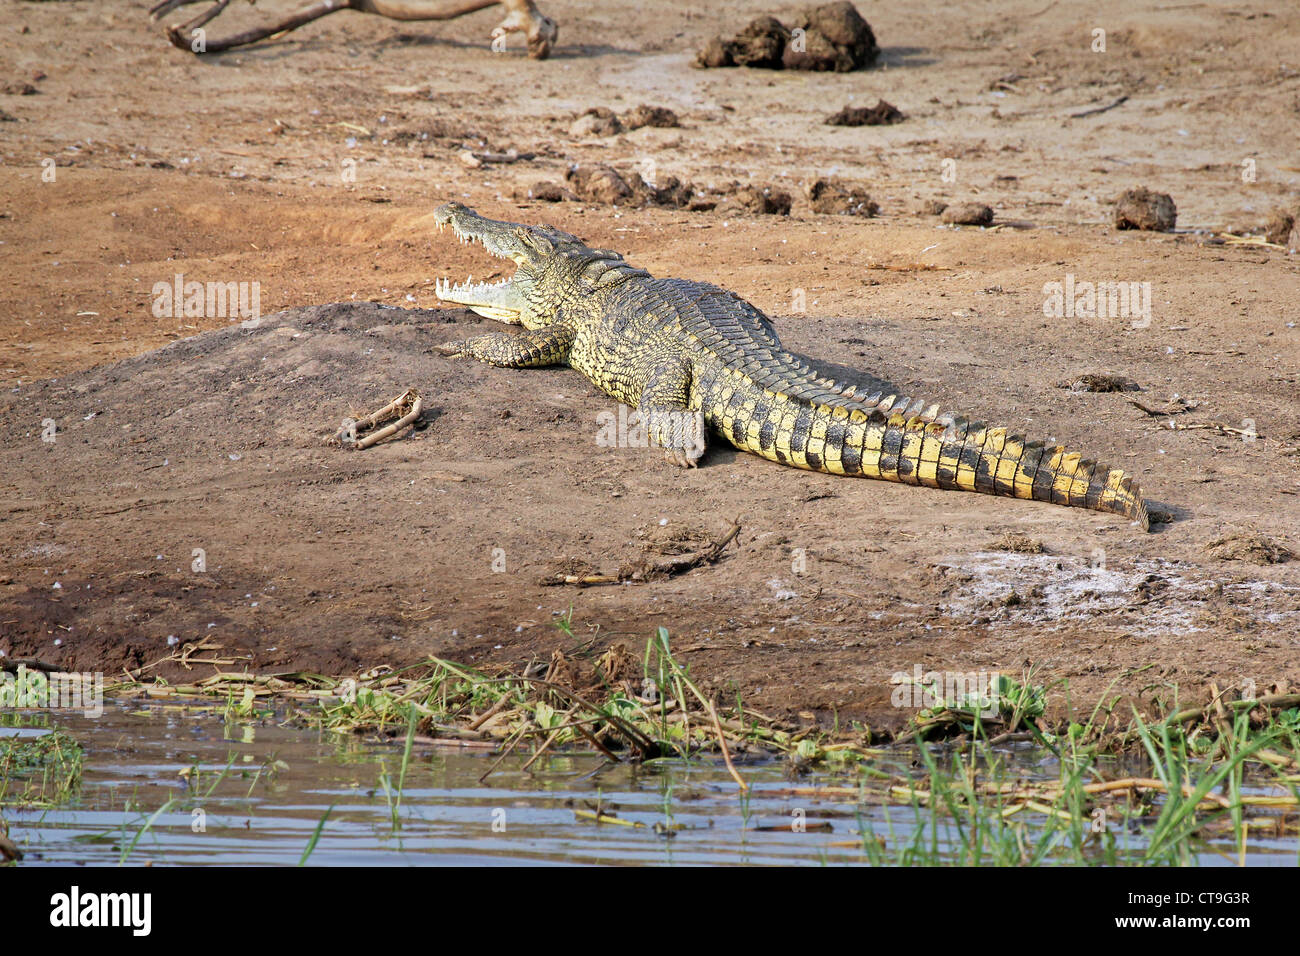 A WILD Nile Crocodile or Common Crocodile (Crocodylus niloticus) basking on the banks of the Kazinga Channel in Uganda, Africa. Stock Photo